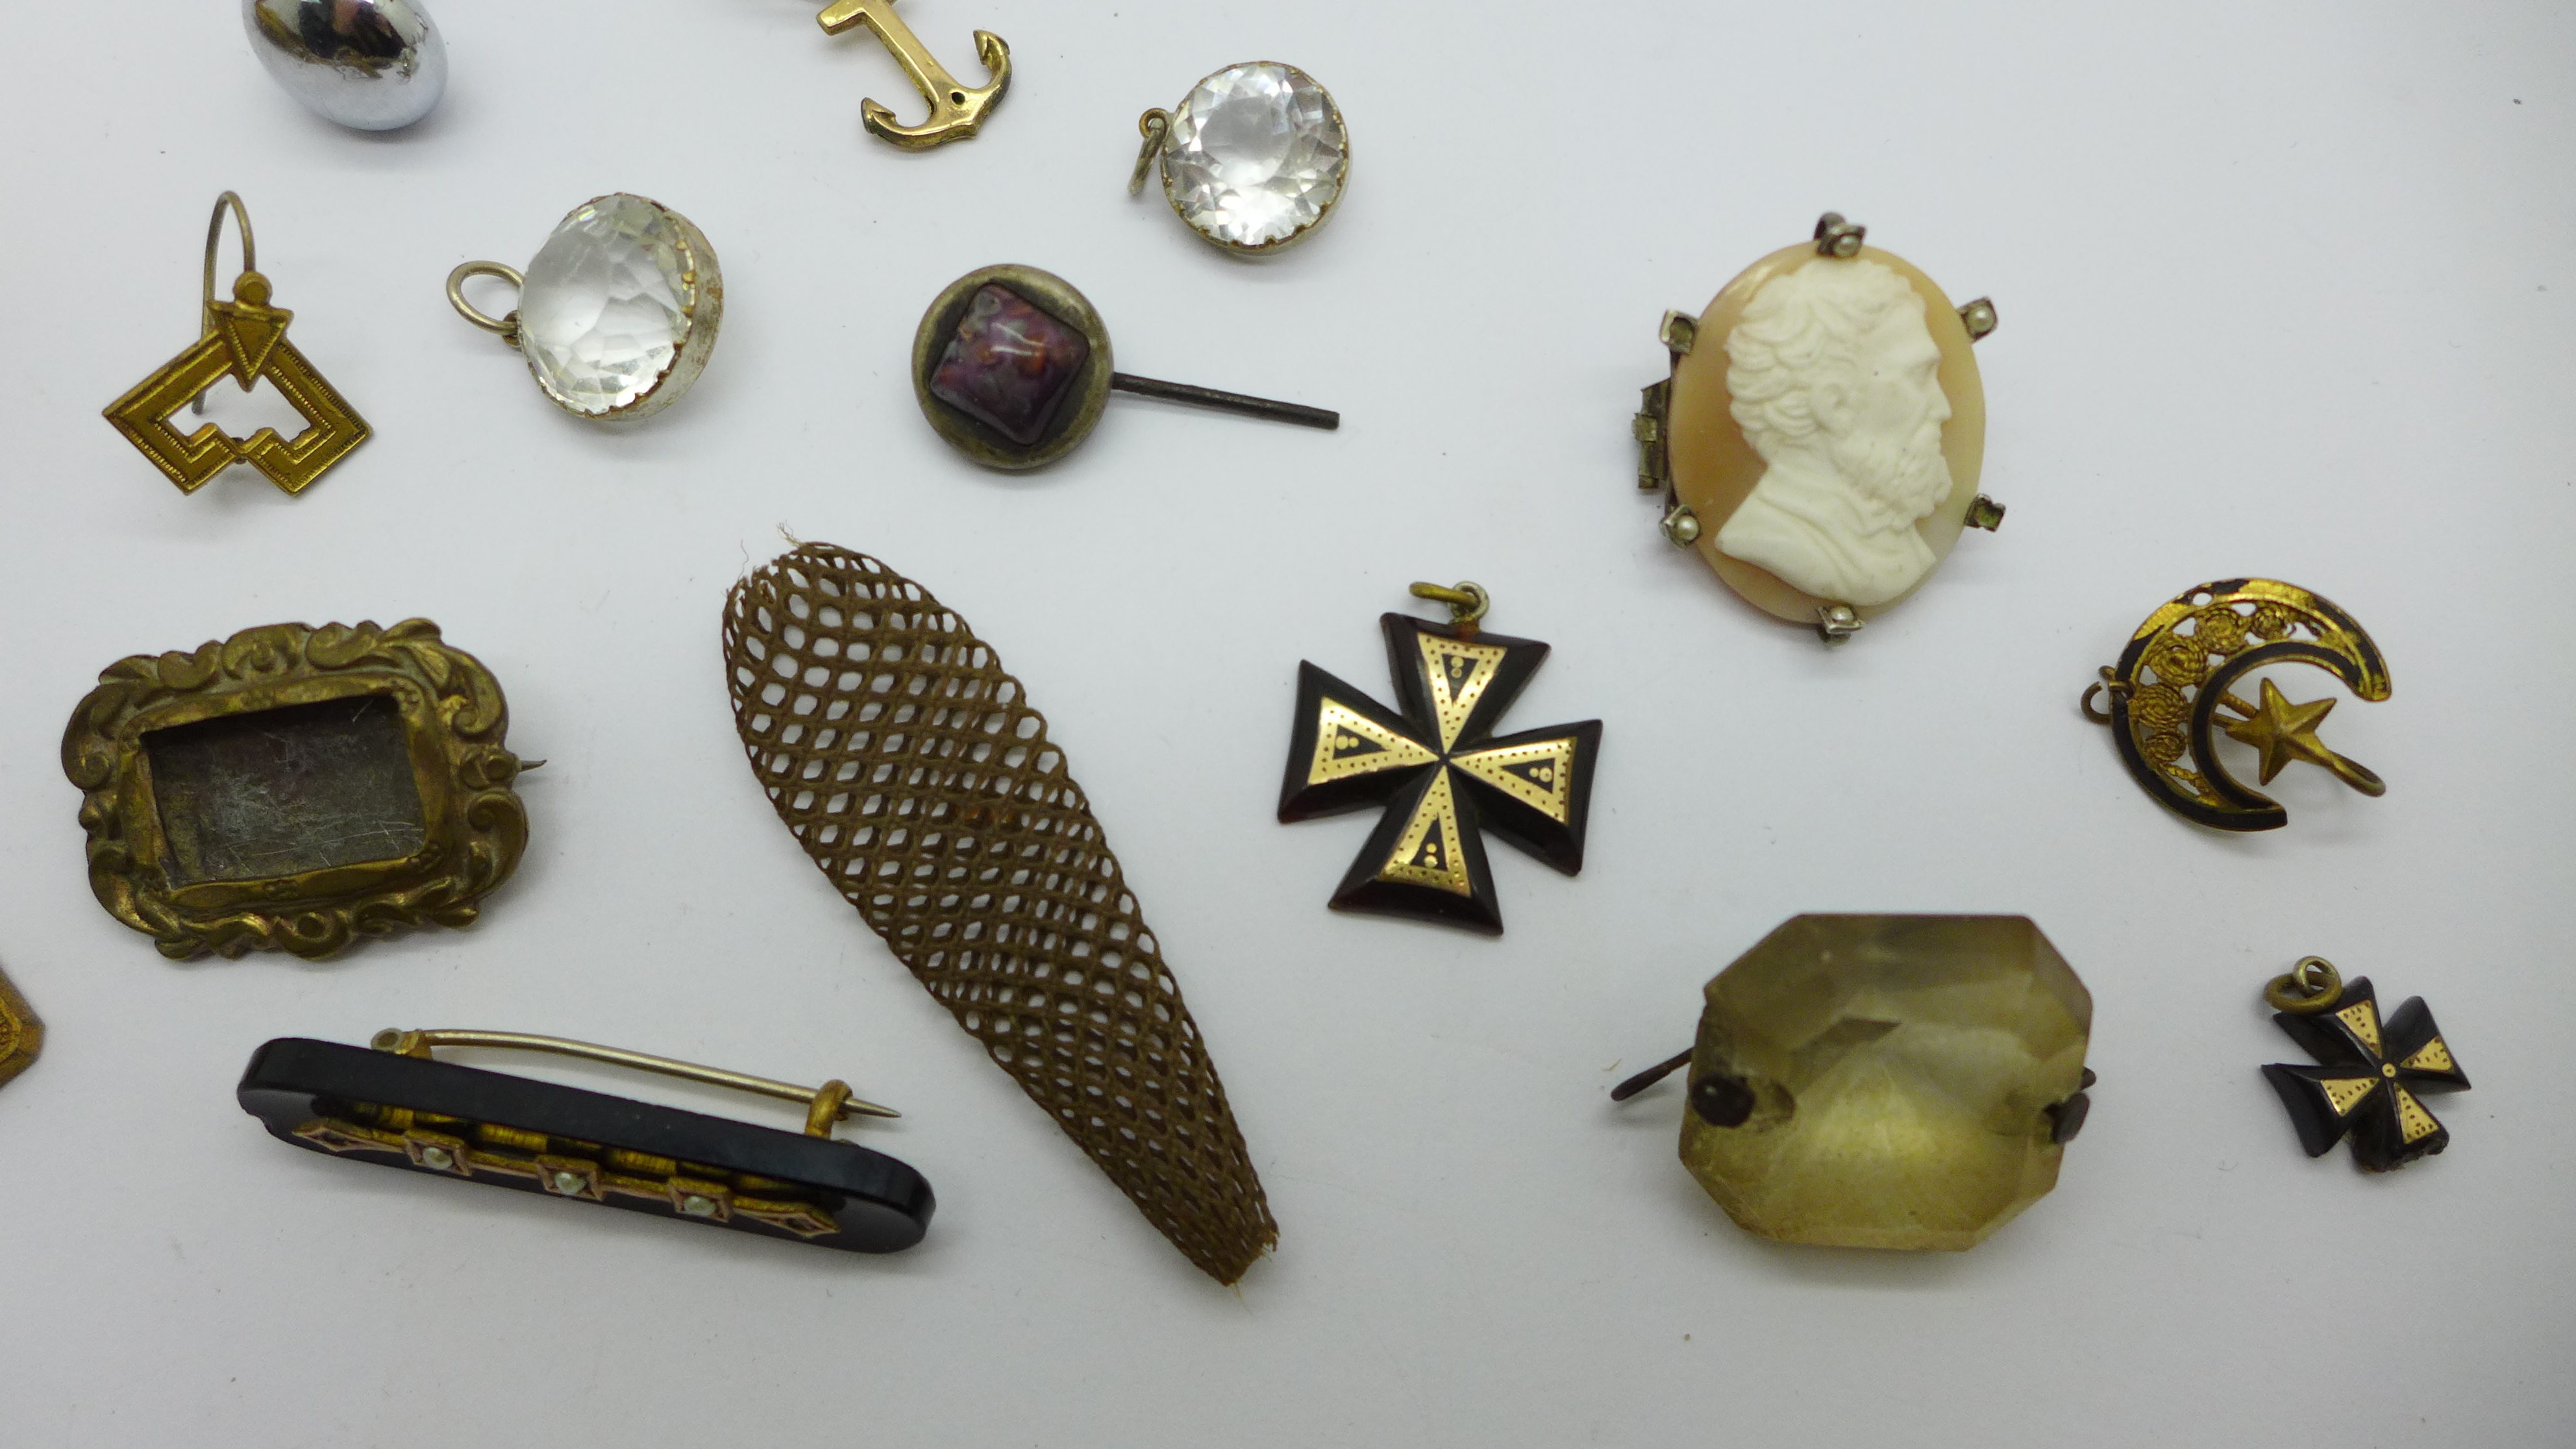 Vintage jewellery, etc., a/f - Image 3 of 3